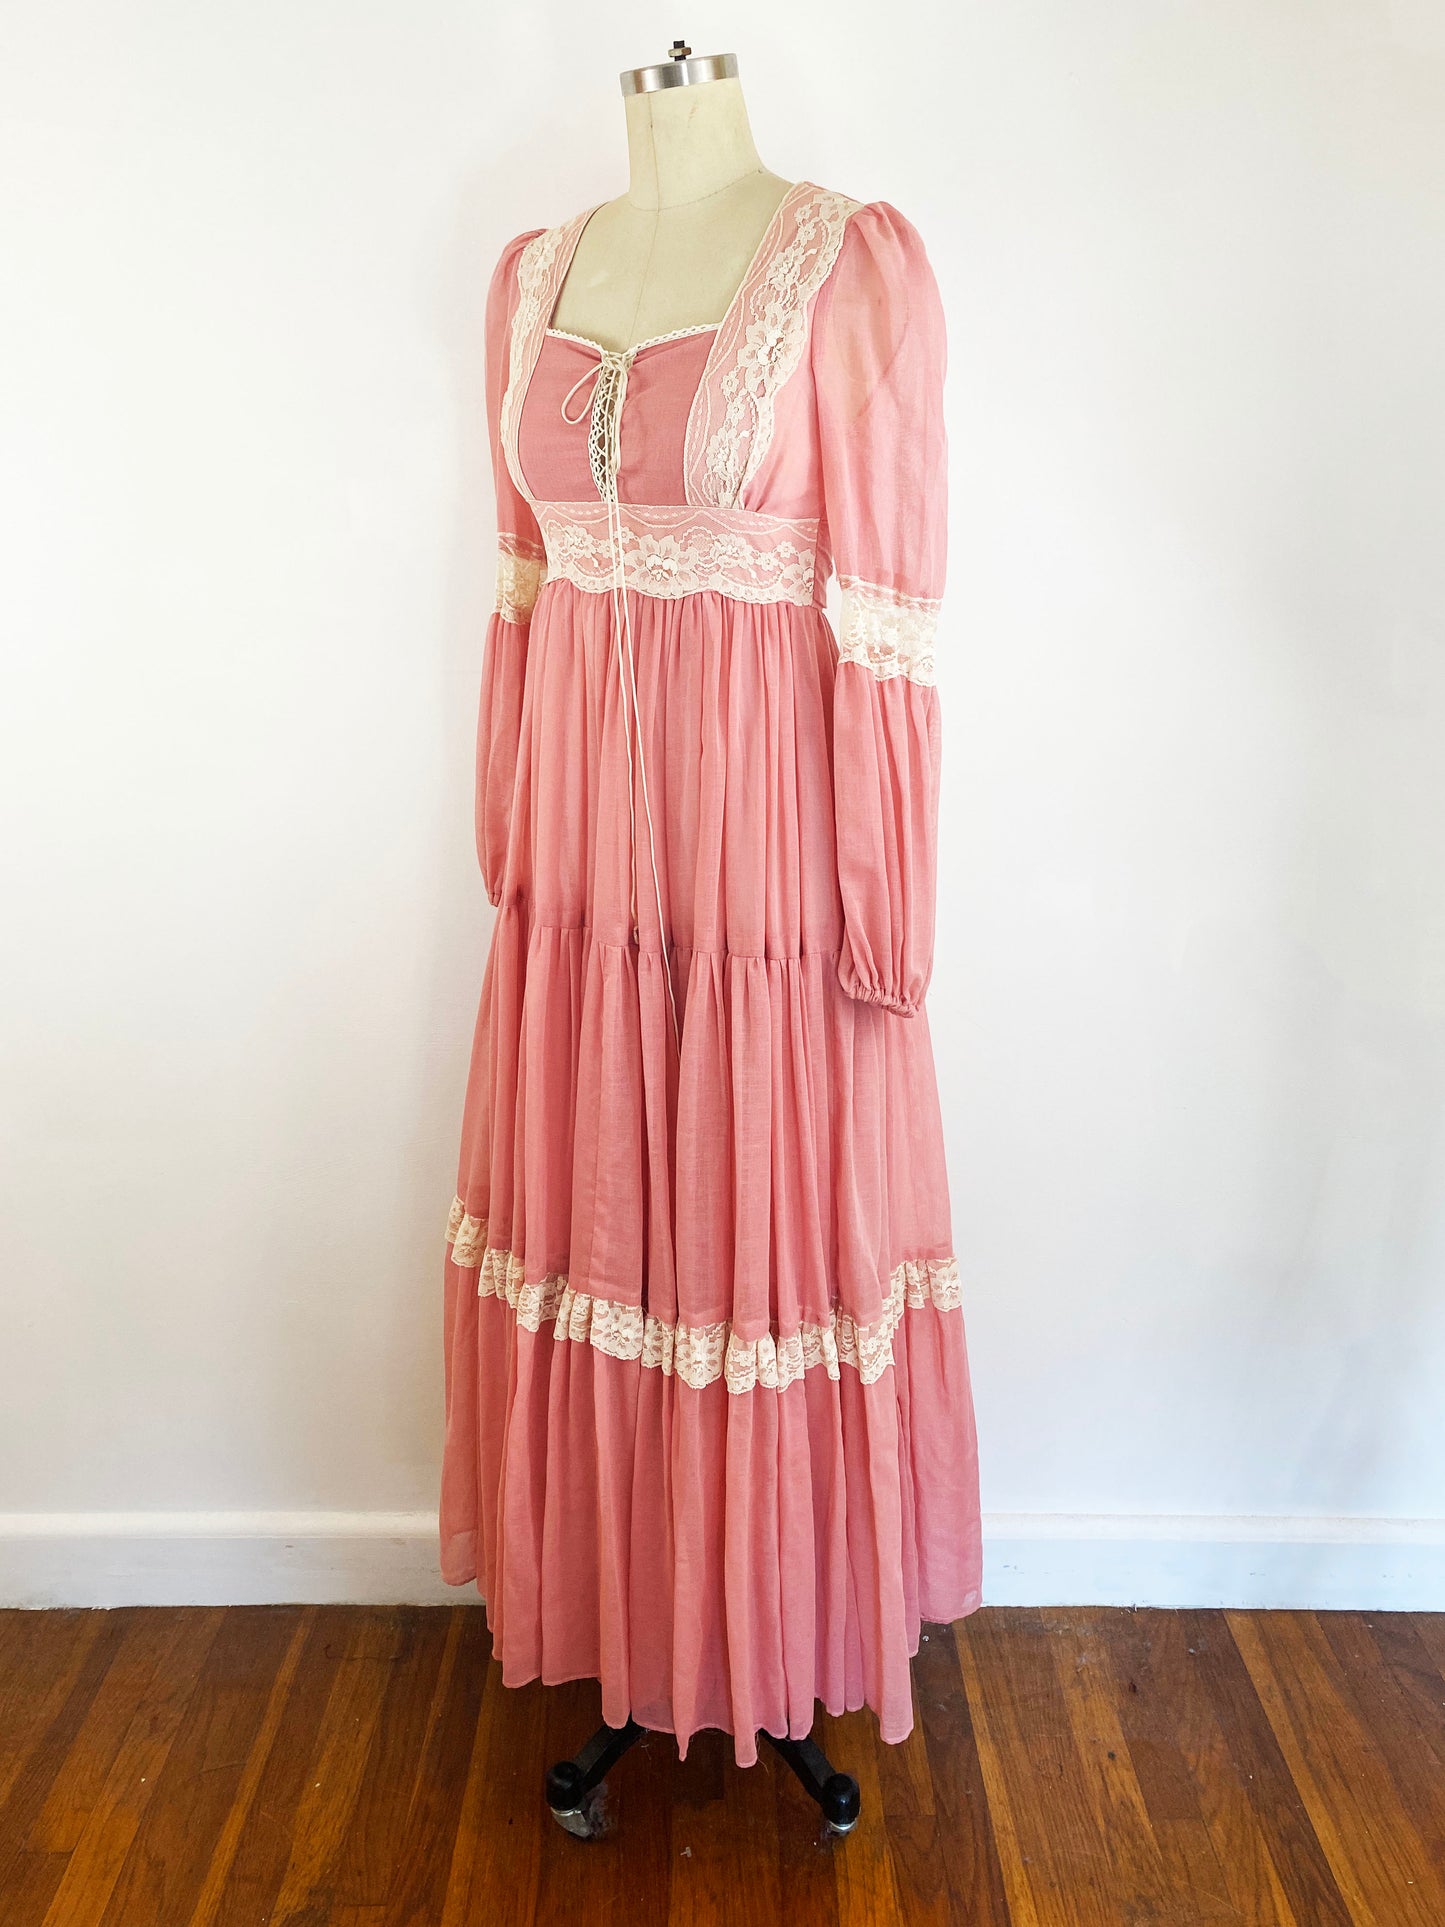 Sale Vintage Nightgown Vassarette Petite 70s, Pink, Beige, Sleeveless,  Embroidered, Floral, Lace, Ankle Length, Maxi, Cottage Core, Lingerie 